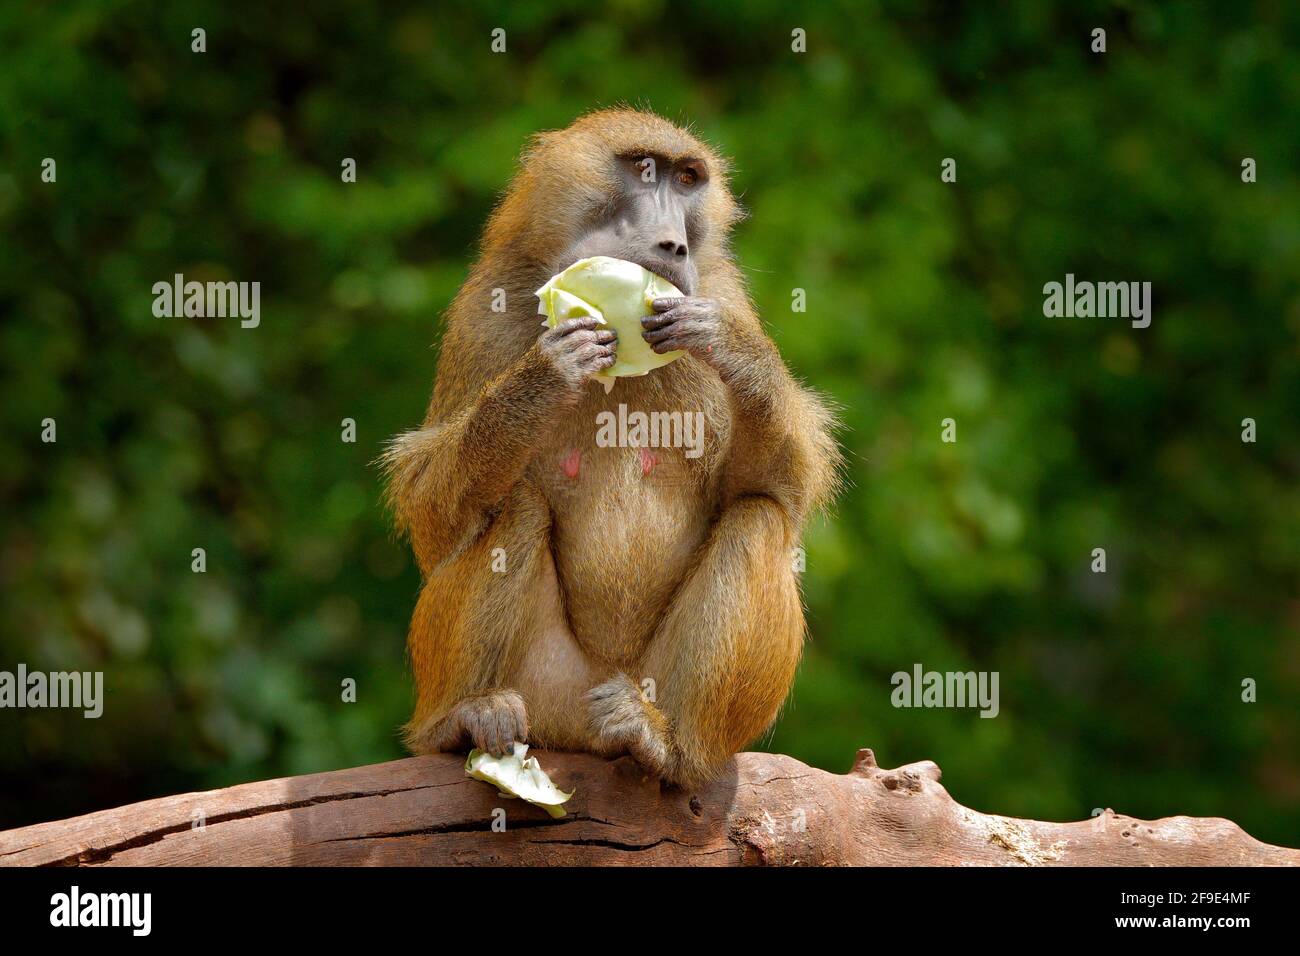 Guinea baboon, Papio papio, monkey from Guinea, Senegal and Gambia. Wild mammal in the nature habitat. Monkey feeding fruits in the gren vegetaton. Wi Stock Photo